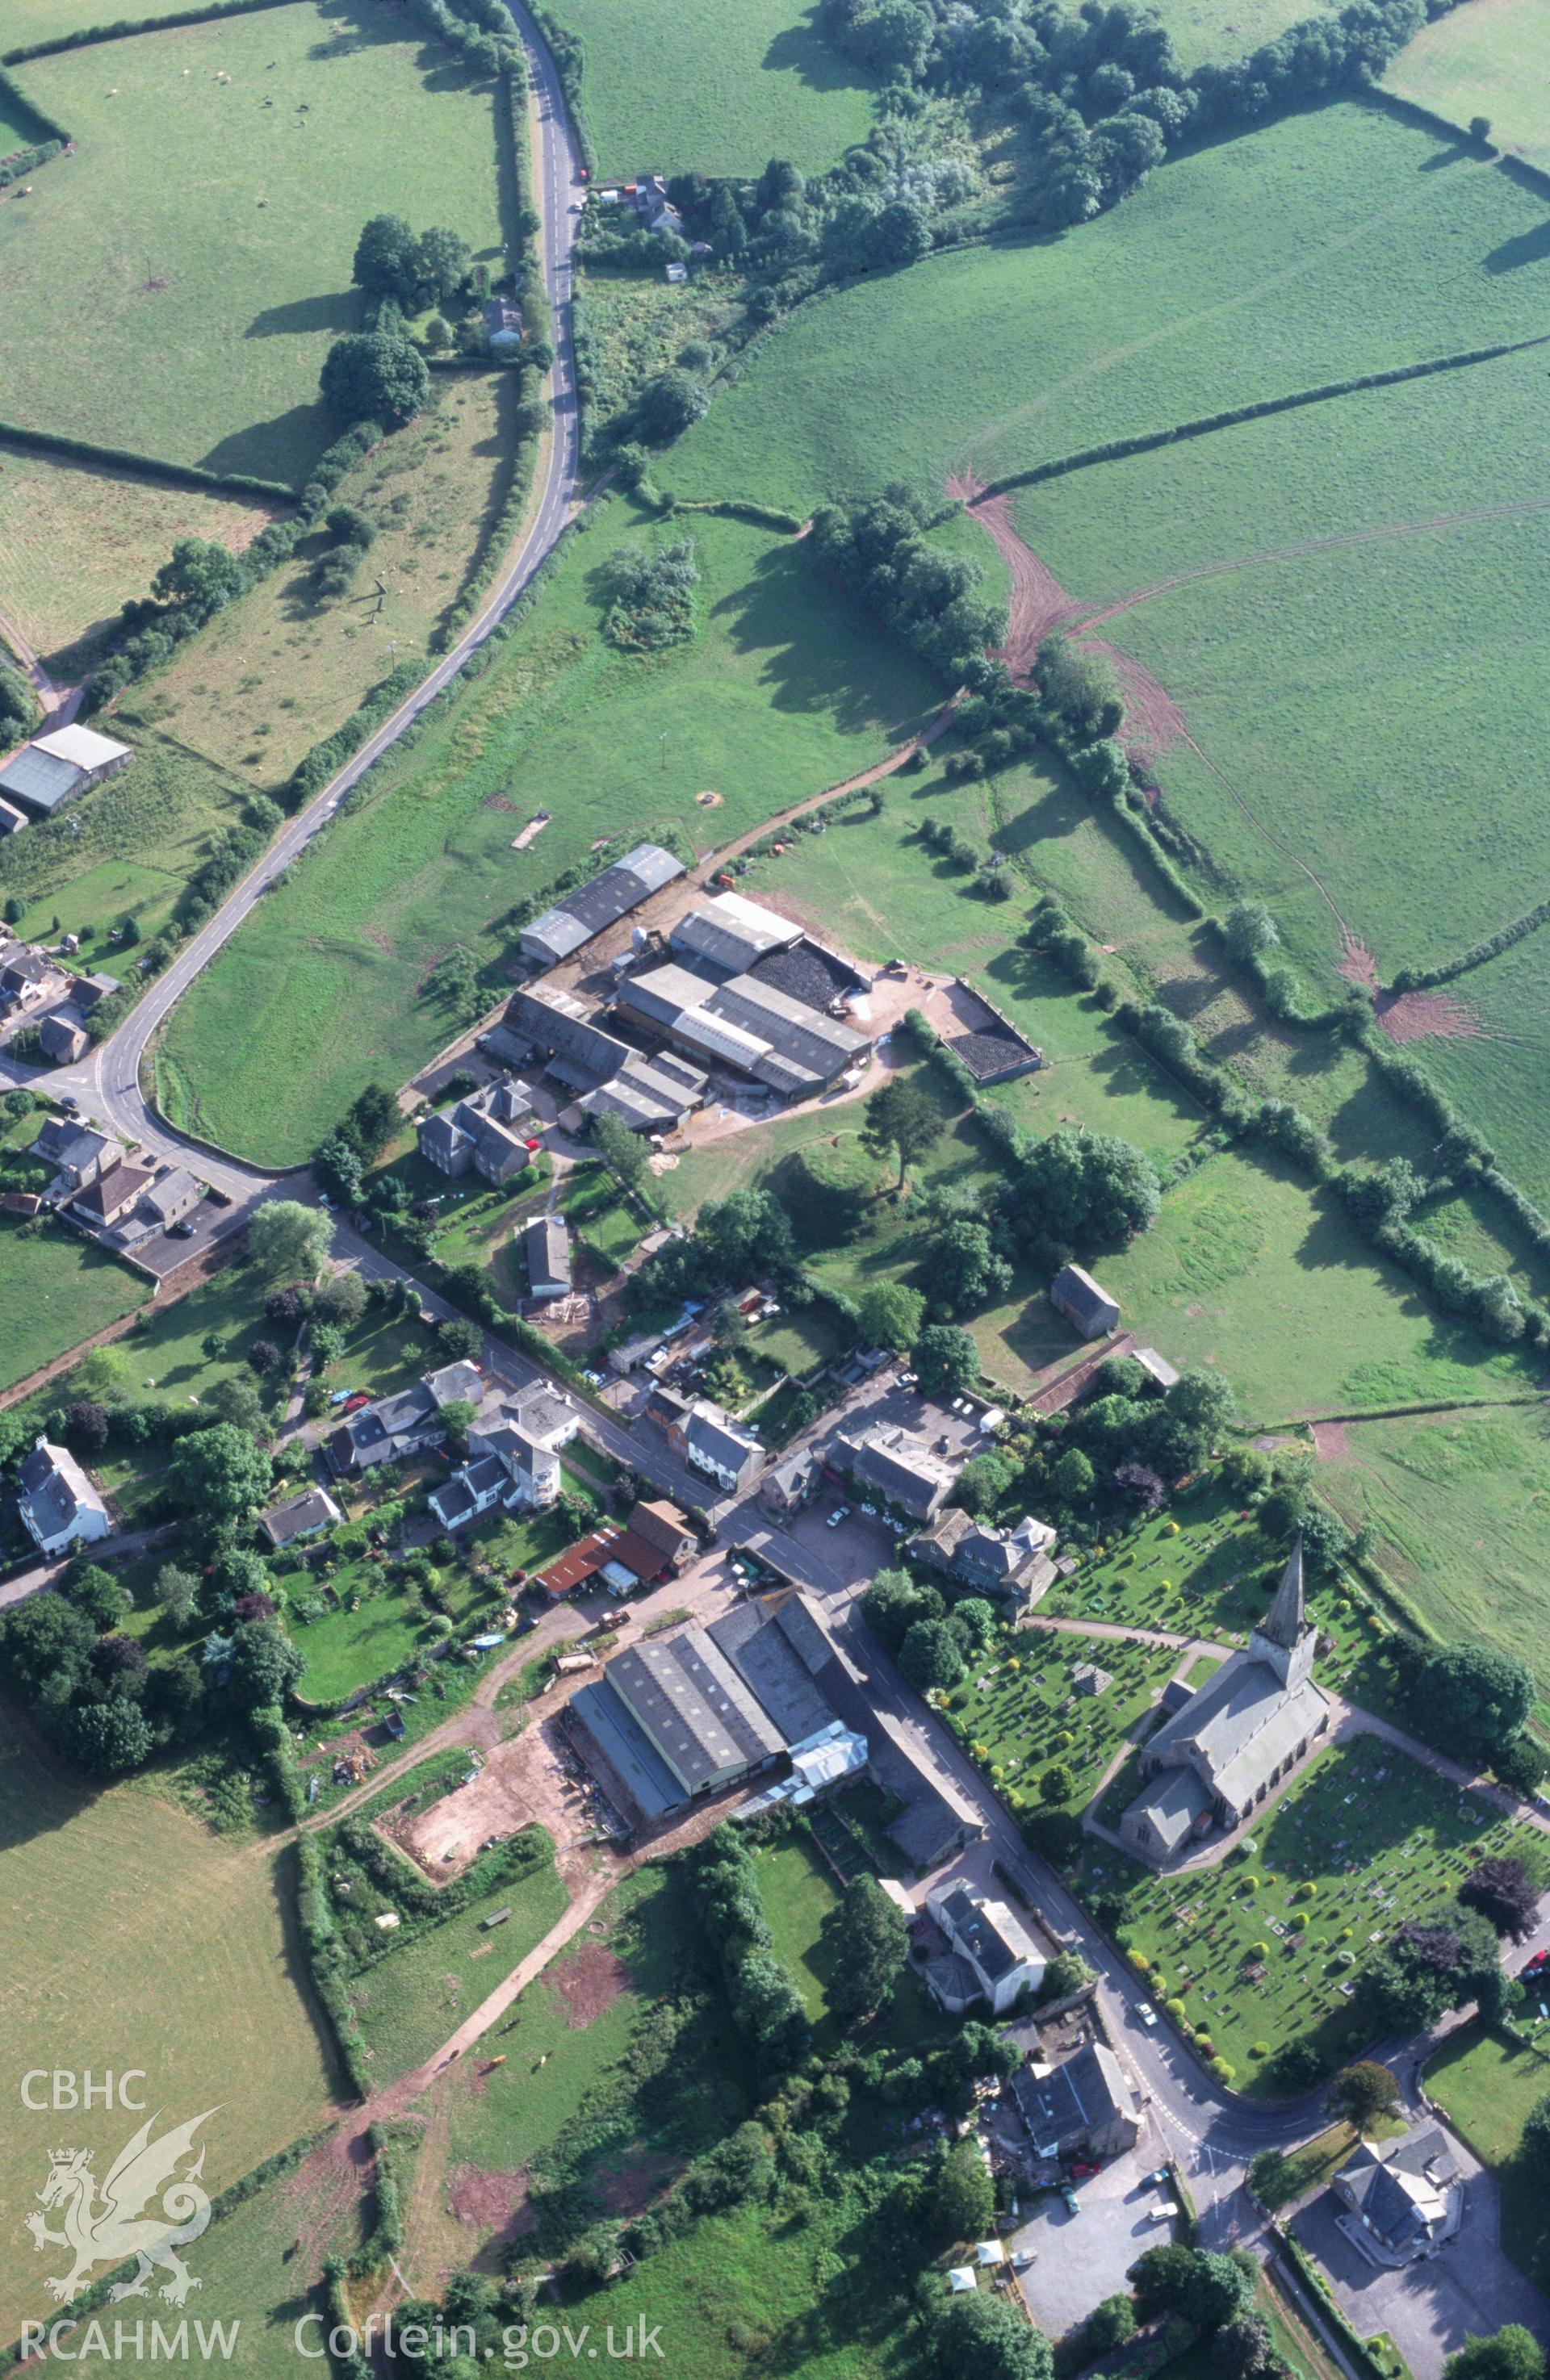 Slide of RCAHMW colour oblique aerial photograph of Trellech Village, taken by T.G. Driver, 22/7/1999.